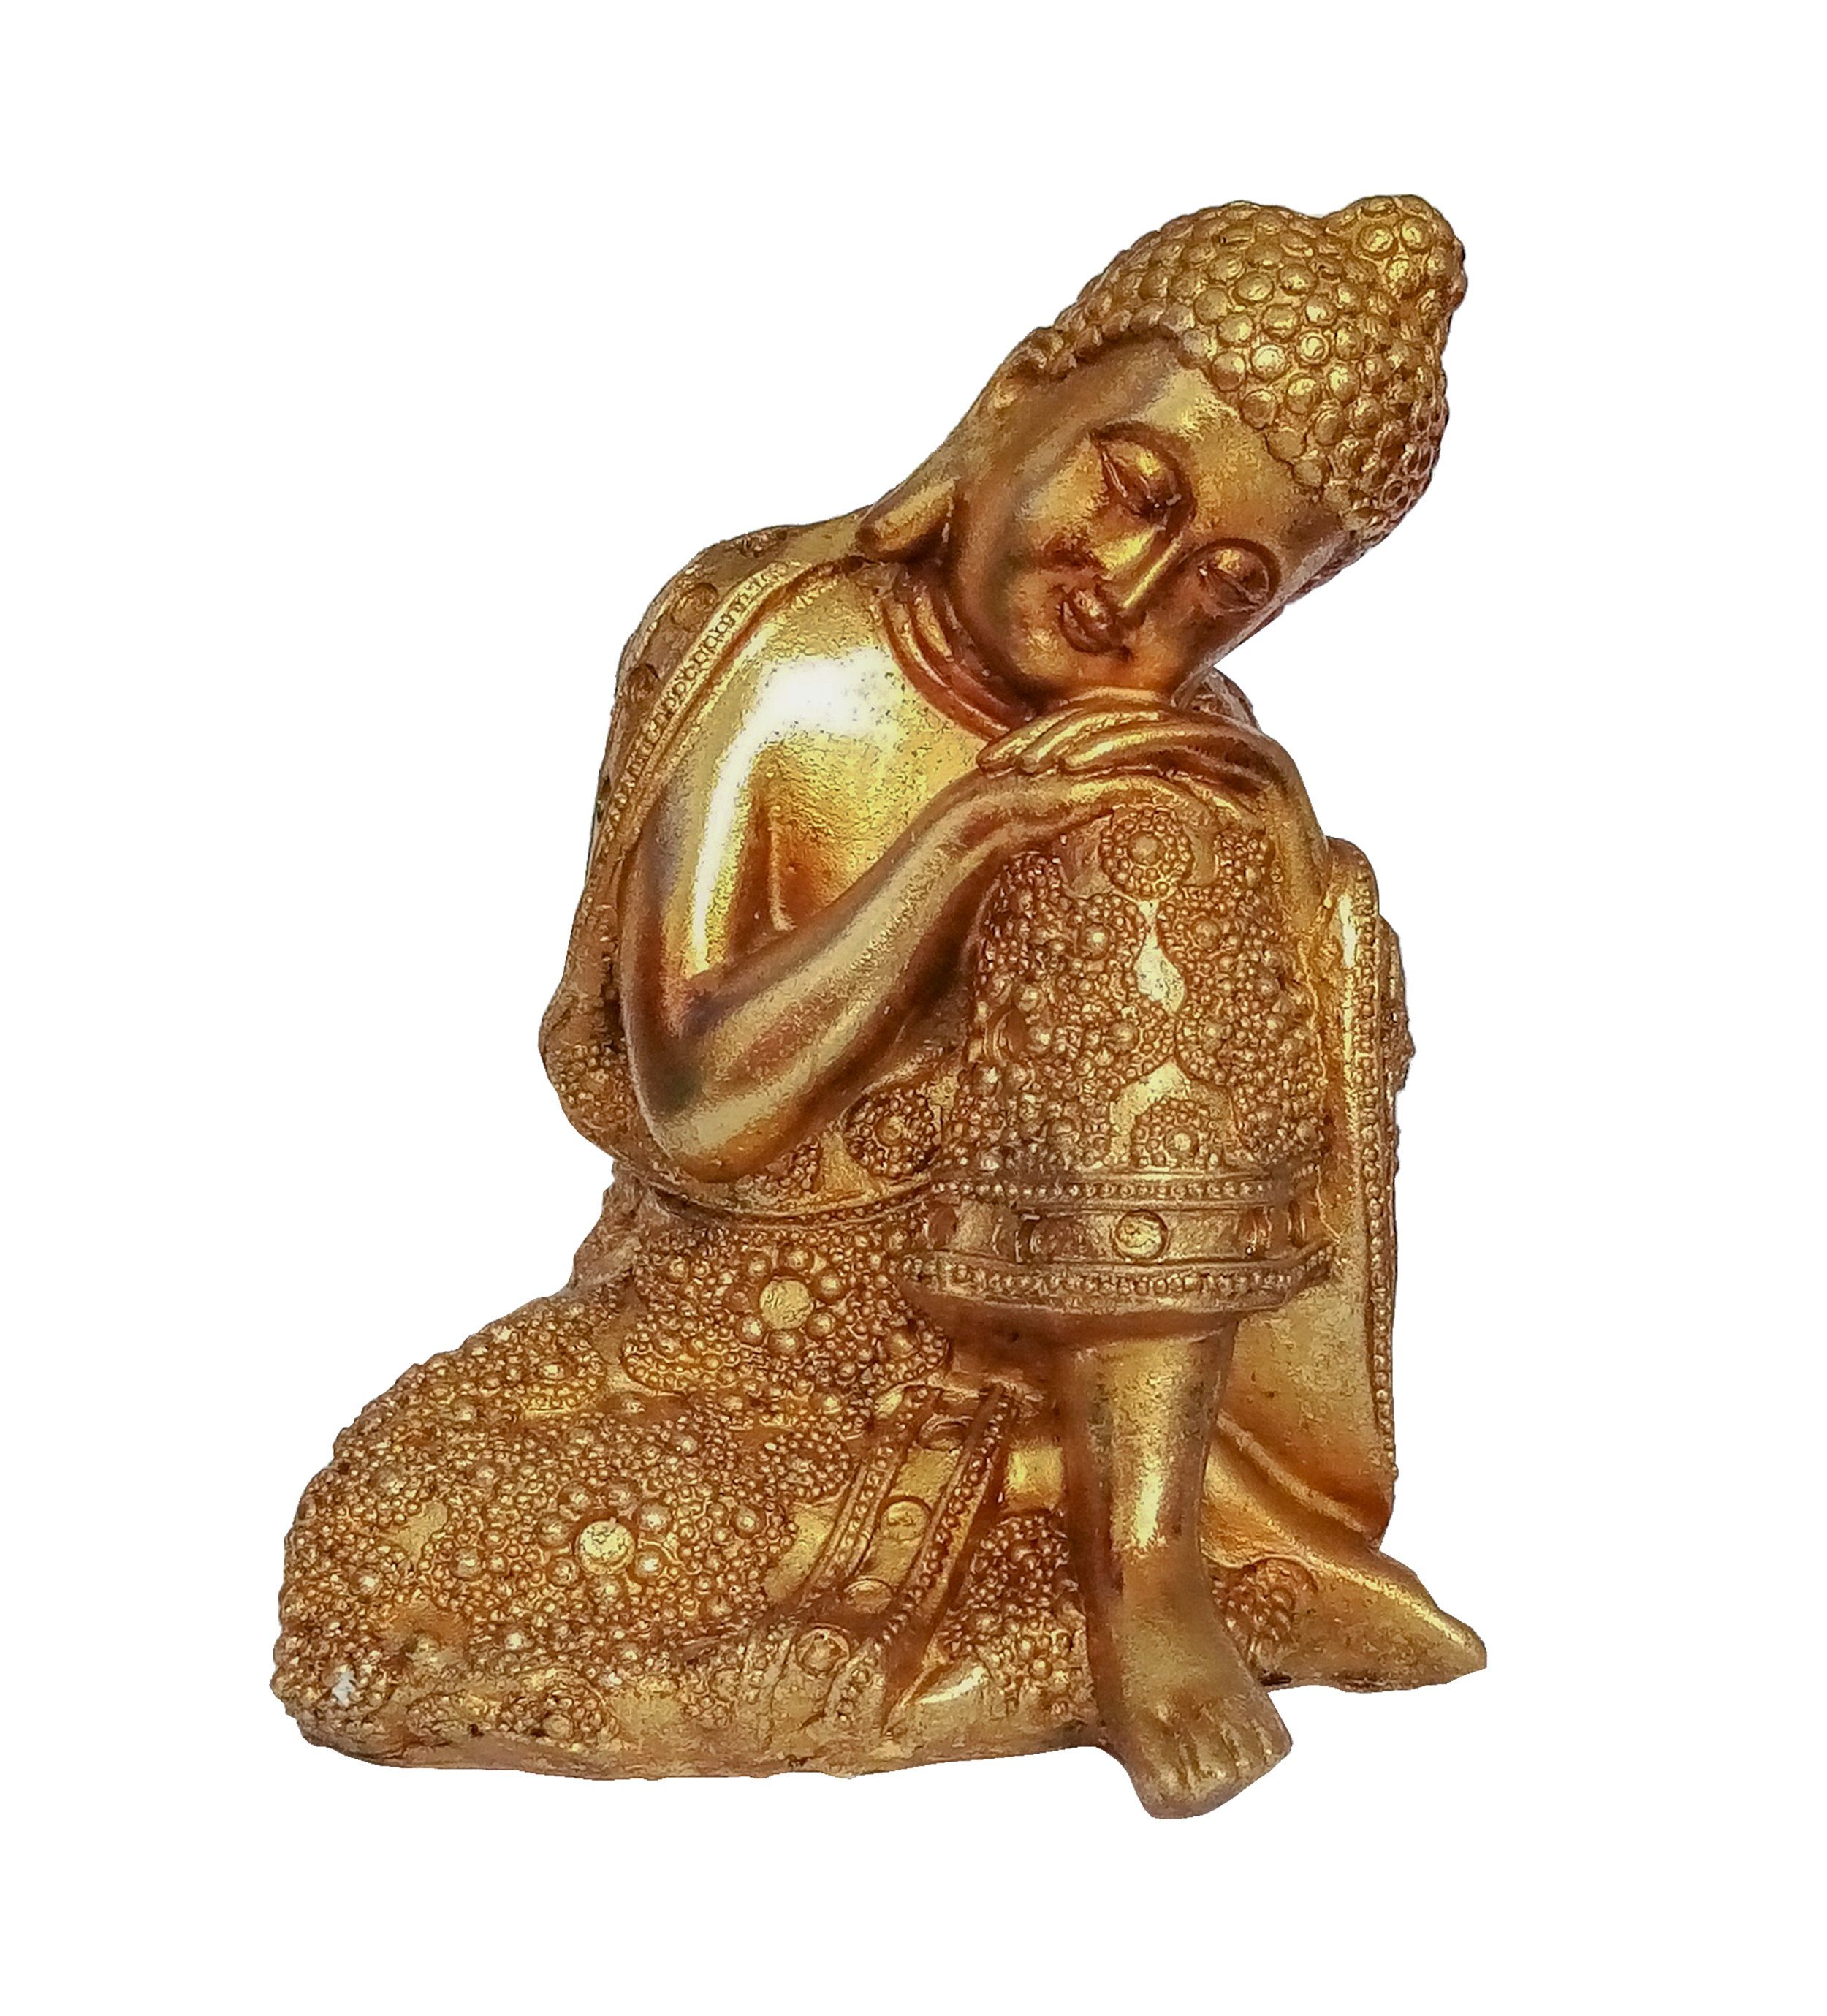 Giftdecor Buddhafigur Buddha Figur 12x16cm Gold Auf Knie aus Polyresin 91 (auf linkes Knie), Thai Budda Garten Statue Feng Shui Deko Decoration